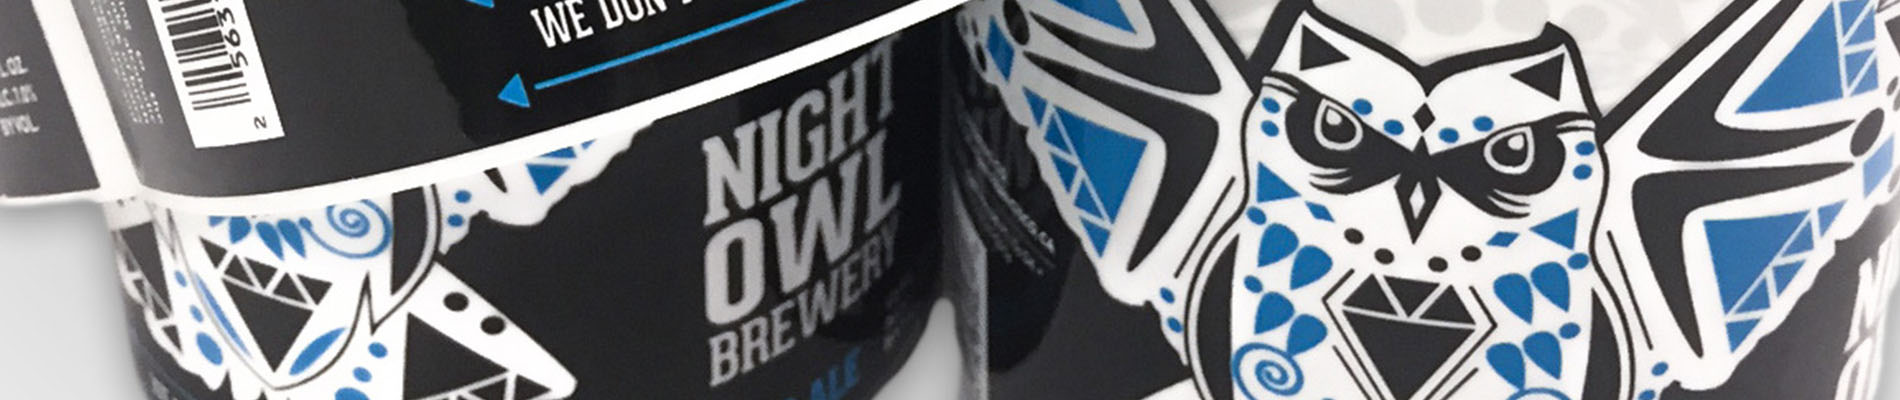 services-dlsdesign-label-design-beer-alcohol-owl-night-geometric-dls